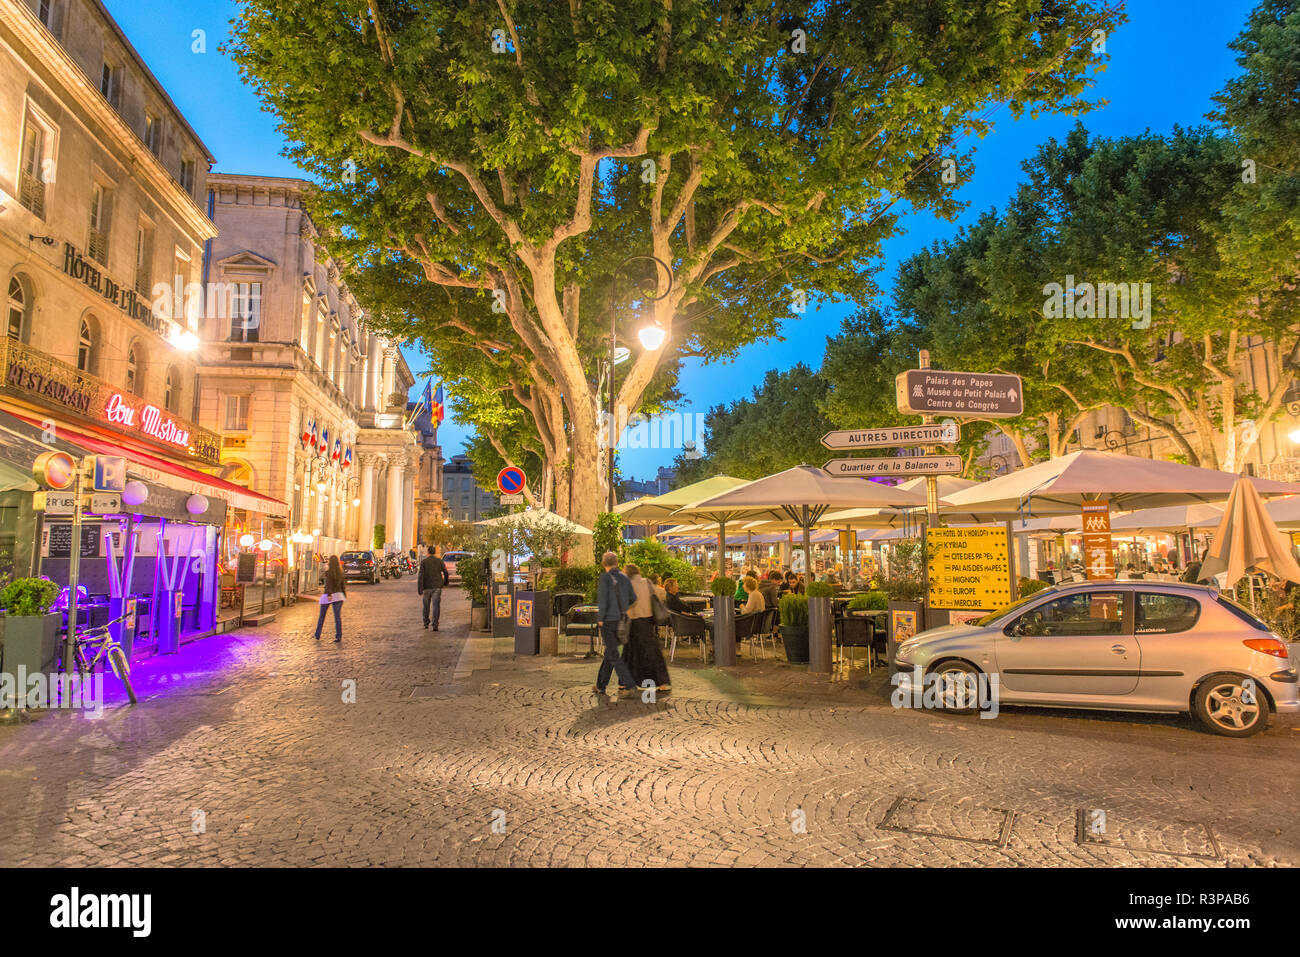 Sidewalk cafe, Clock Square, Avignon, Provence, France Stock Photo